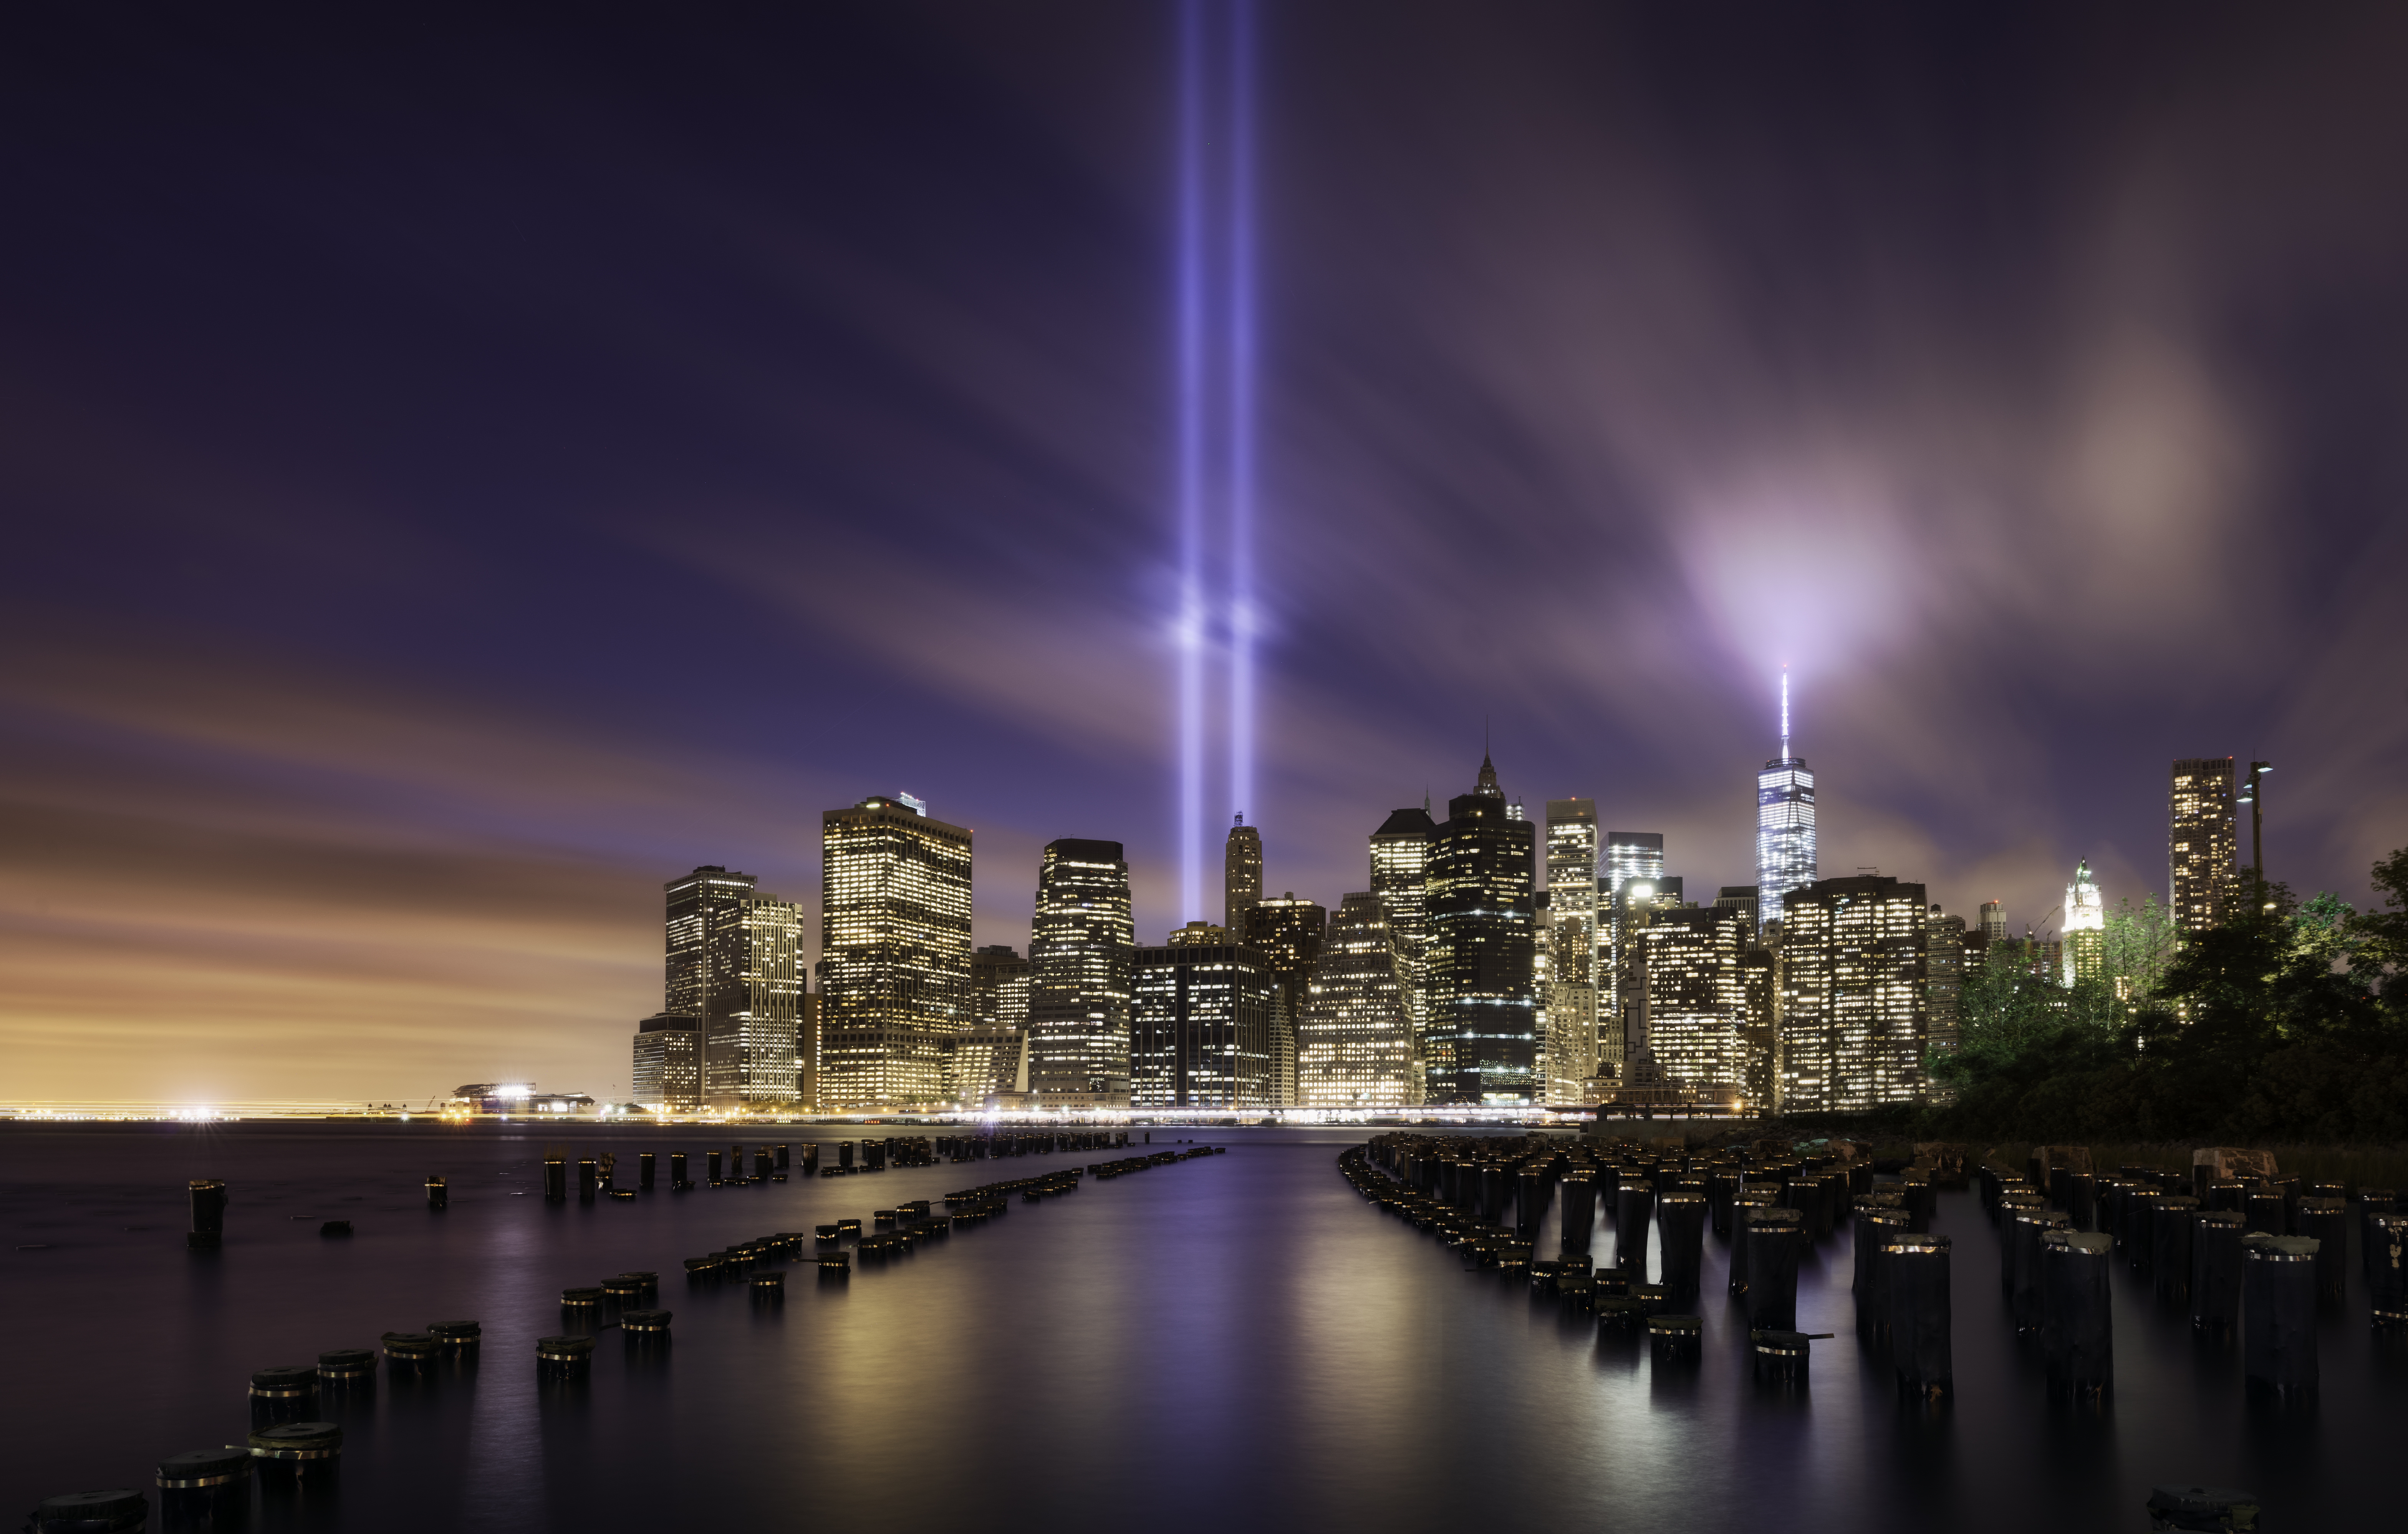 NeverForget - Pete Kohlasch - World Trade Center - New York City